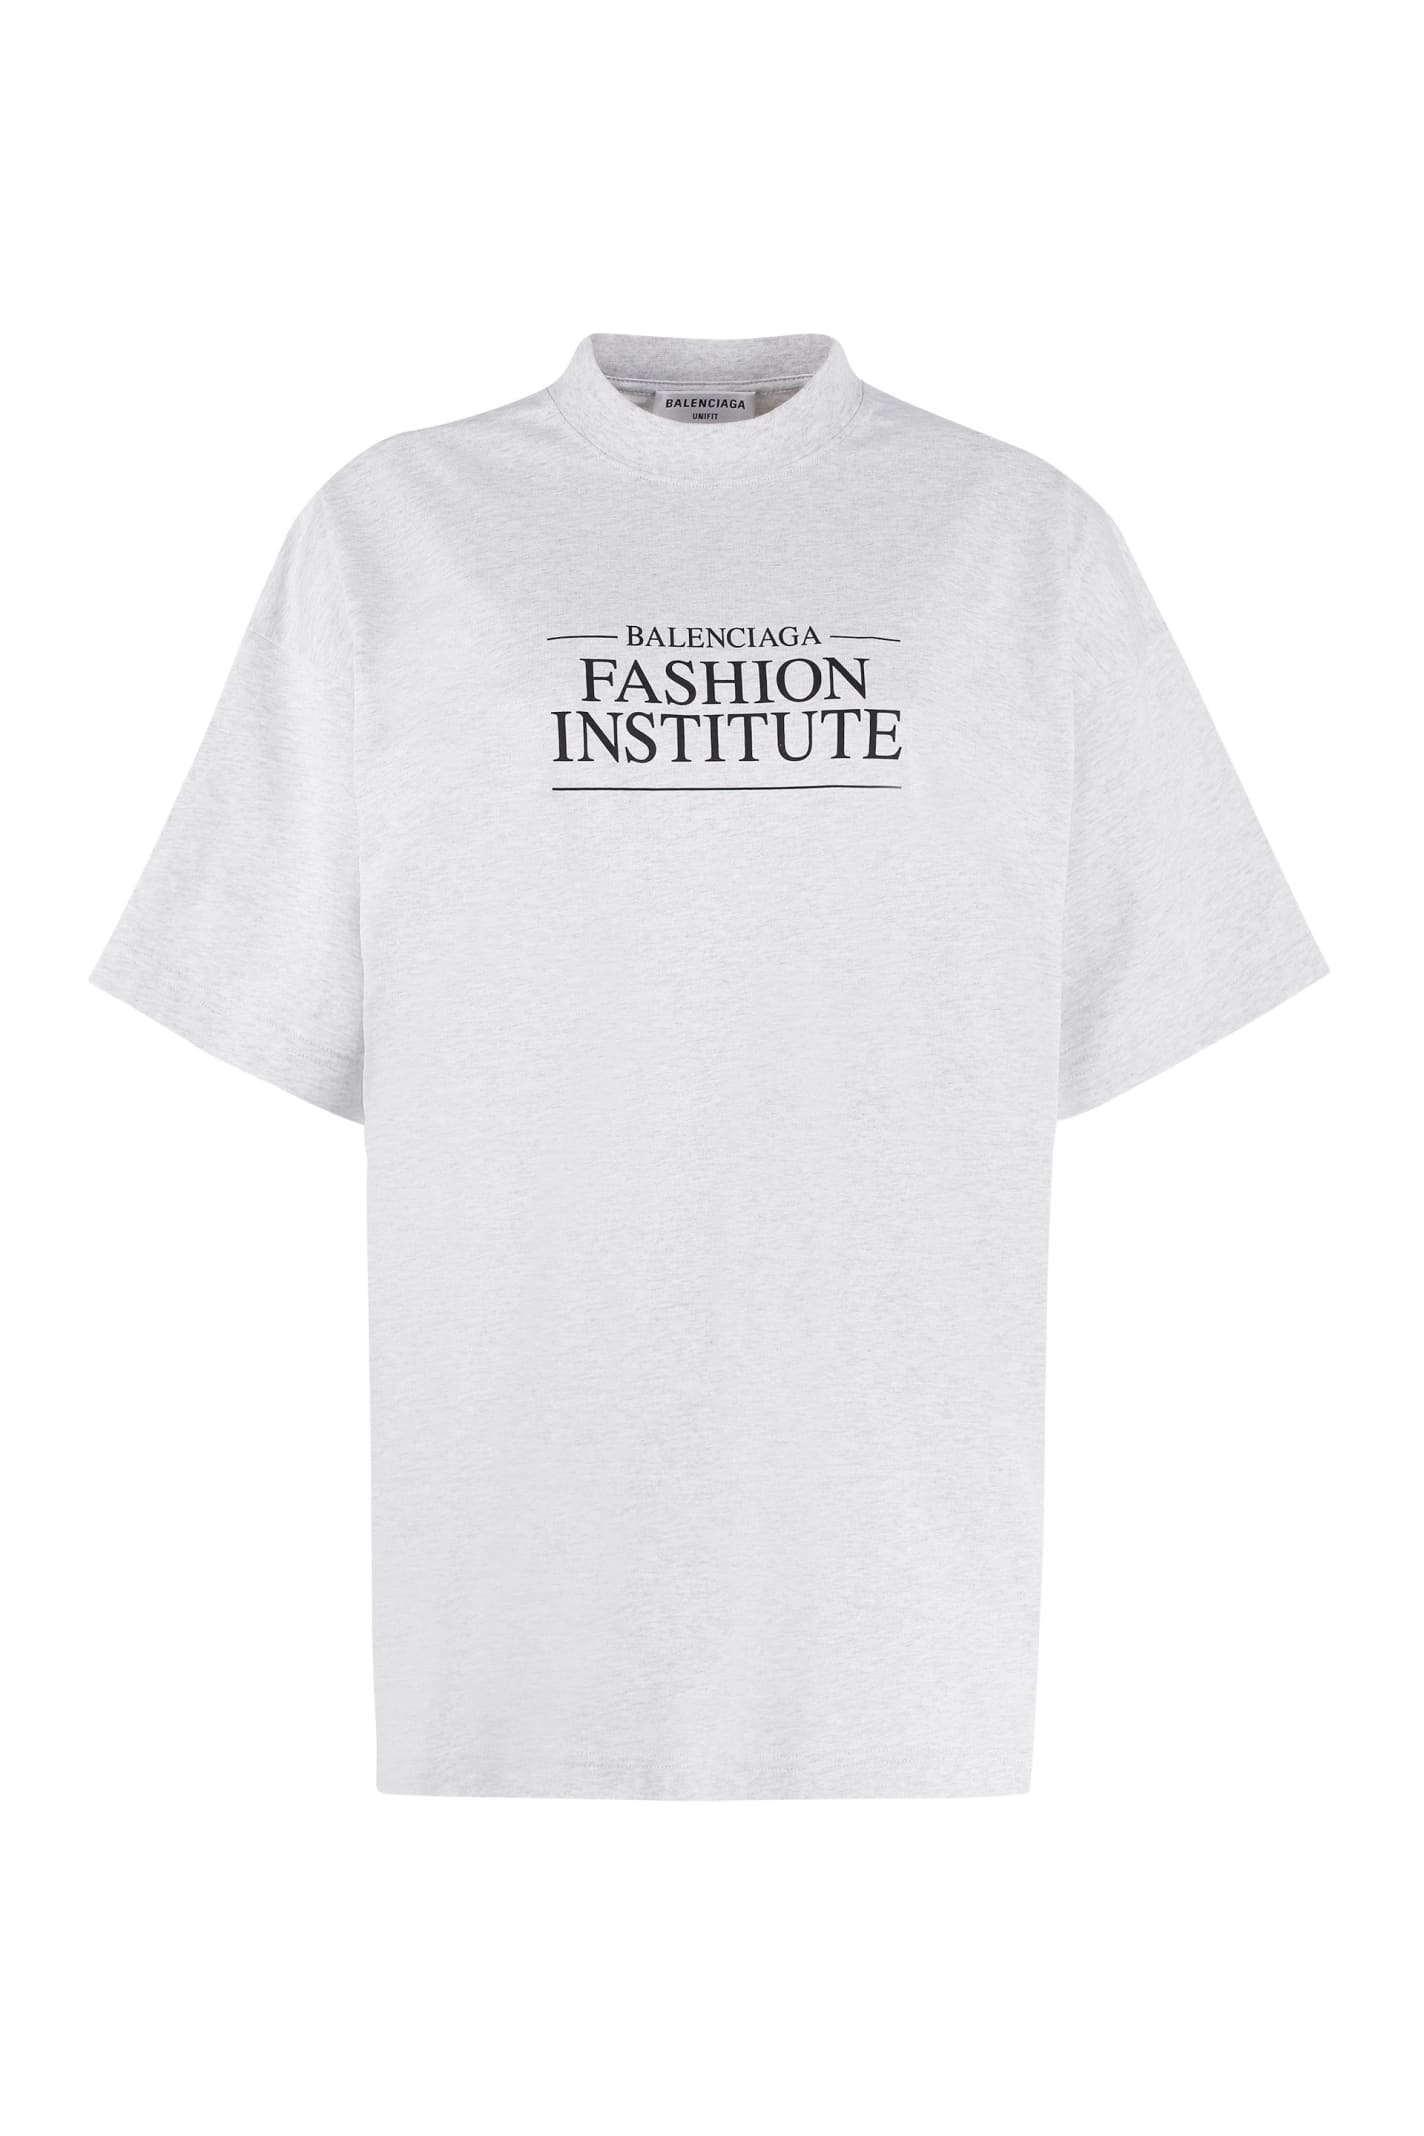 Balenciaga Printed Cotton T-shirt